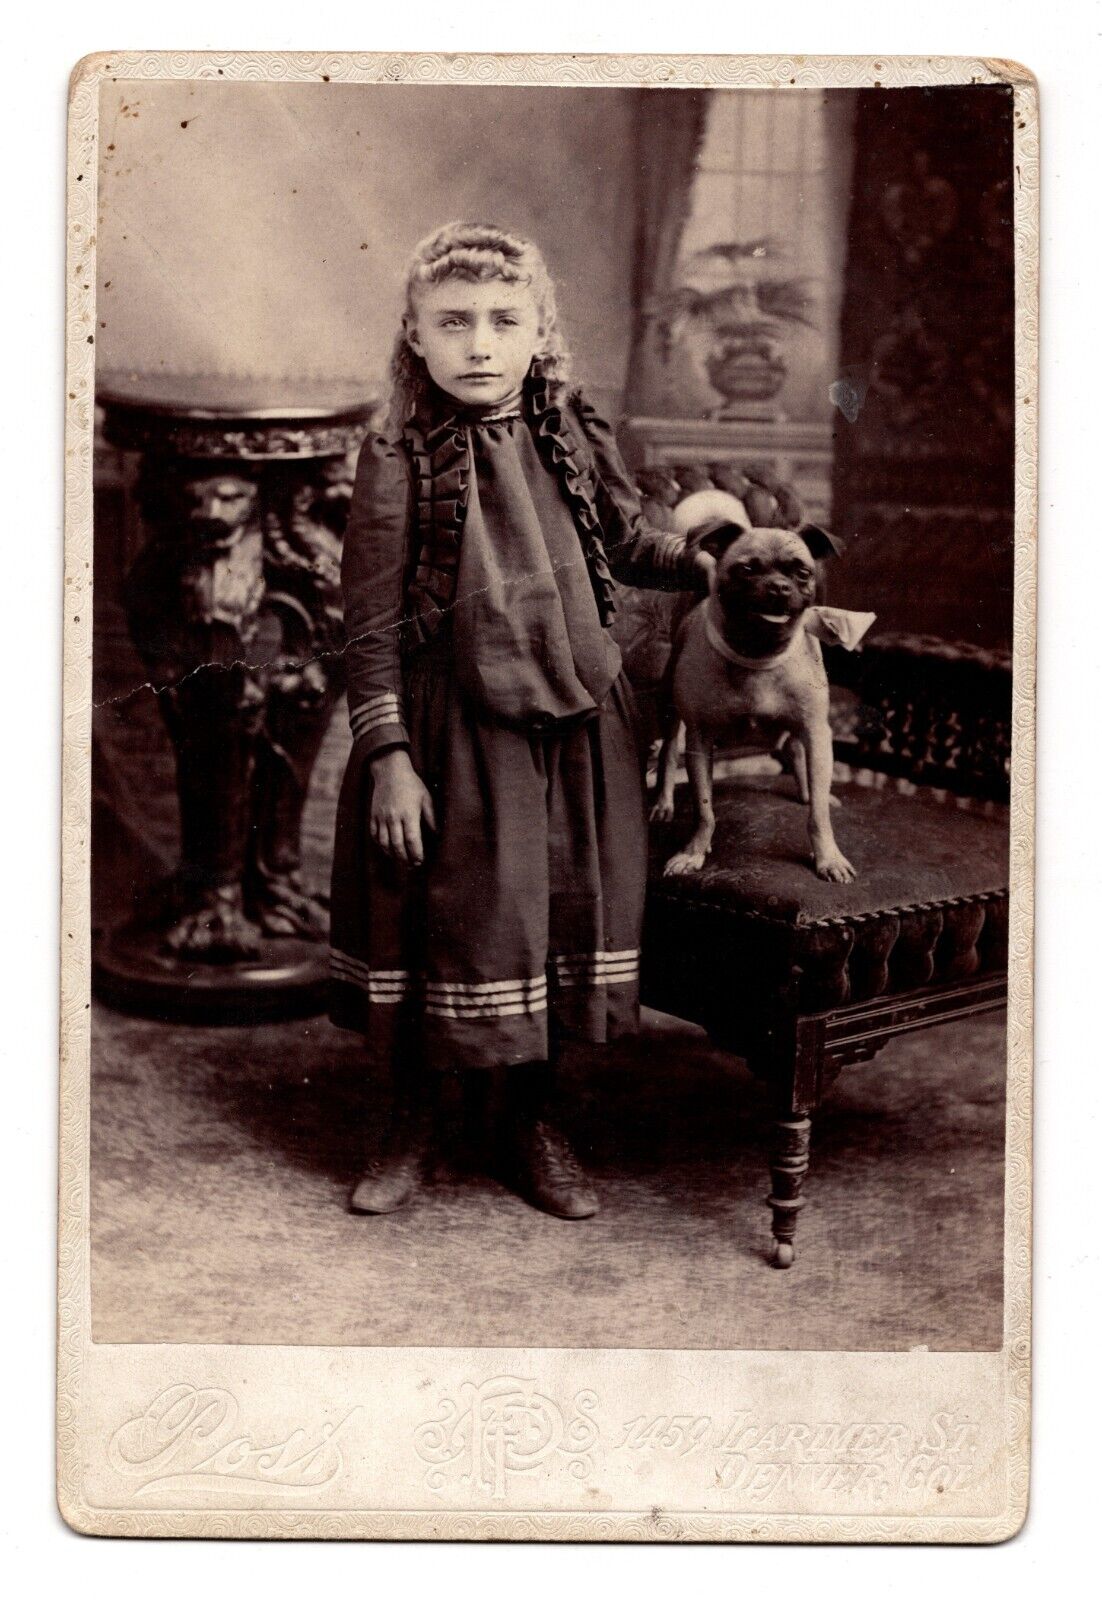 CIRCA 1890s CABINET CARD POST CUTE LITTLE GIRL WITH PUG DENVER COLORADO